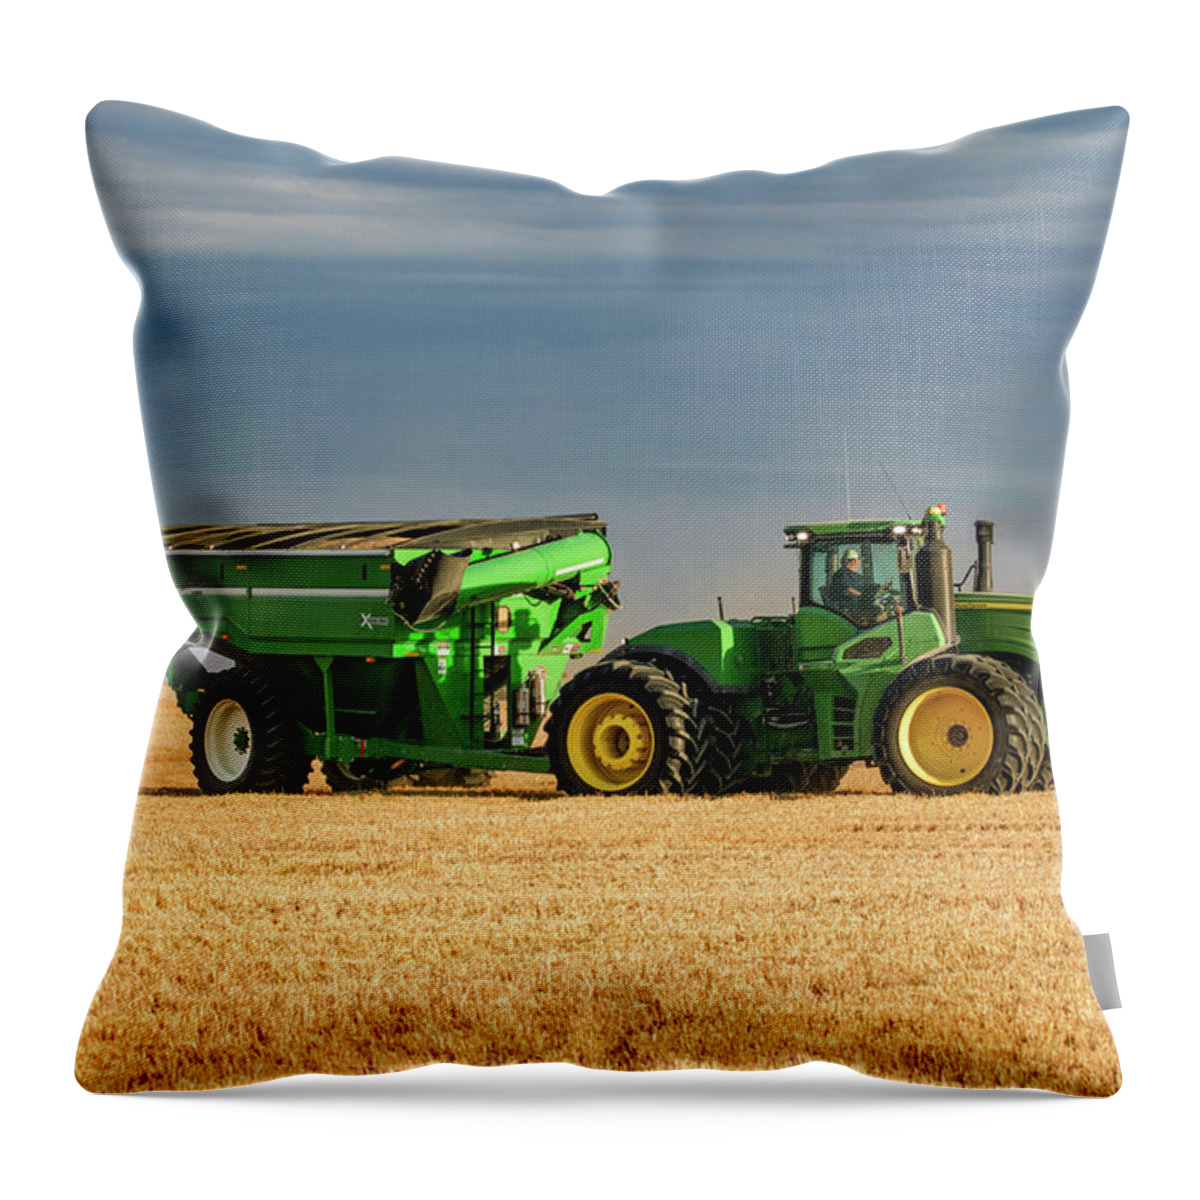 Grain Cart Throw Pillow featuring the photograph Grain Cart by Todd Klassy